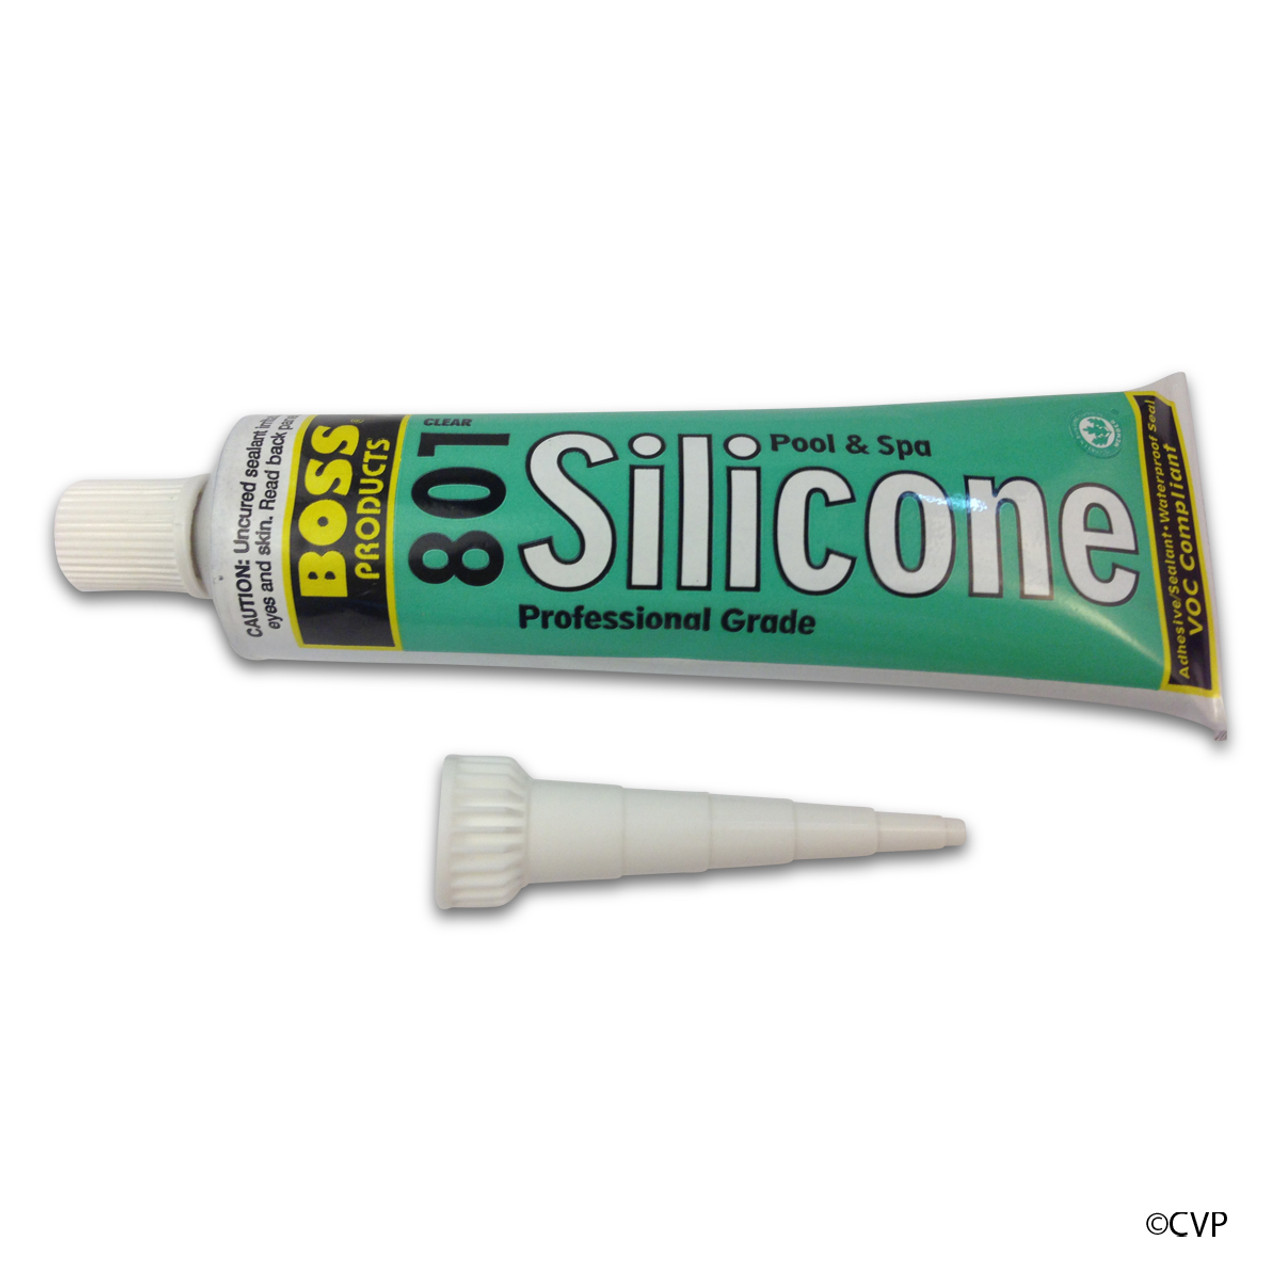 10.3 oz Silicone Adhesive Clear 80200B